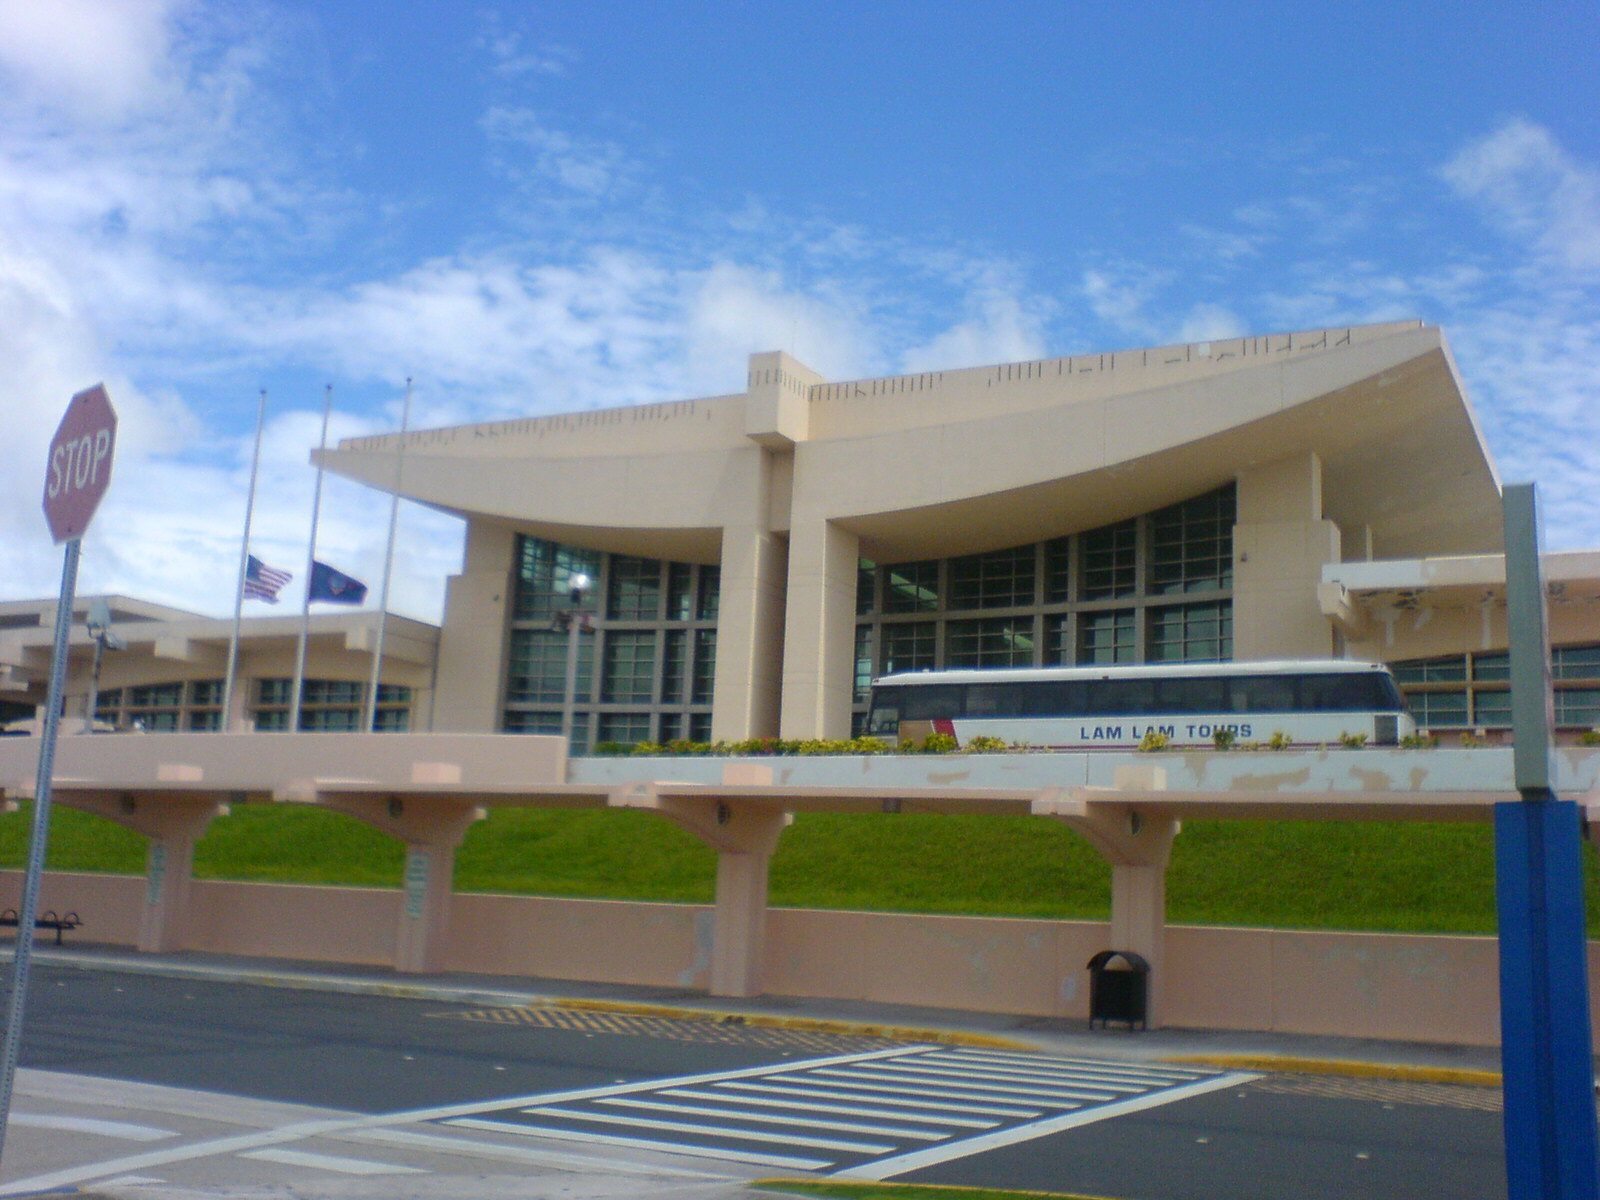 Guam International Airport